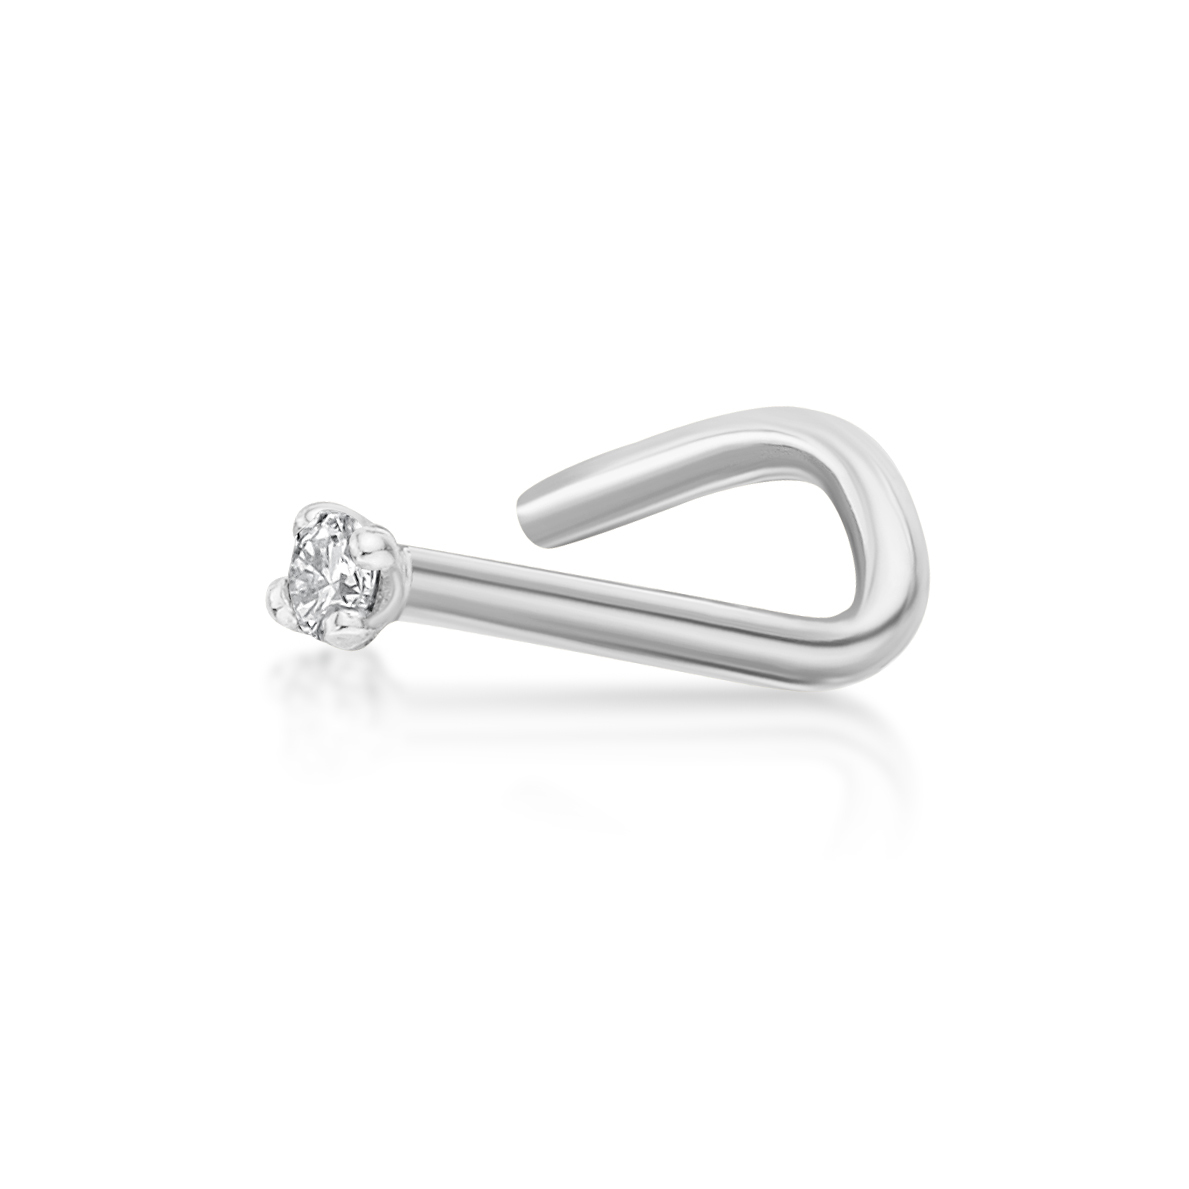 Lavari Jewelers Women's Curved Screw Nose Ring, 14K White Gold, .01 Carat, 20 Gauge